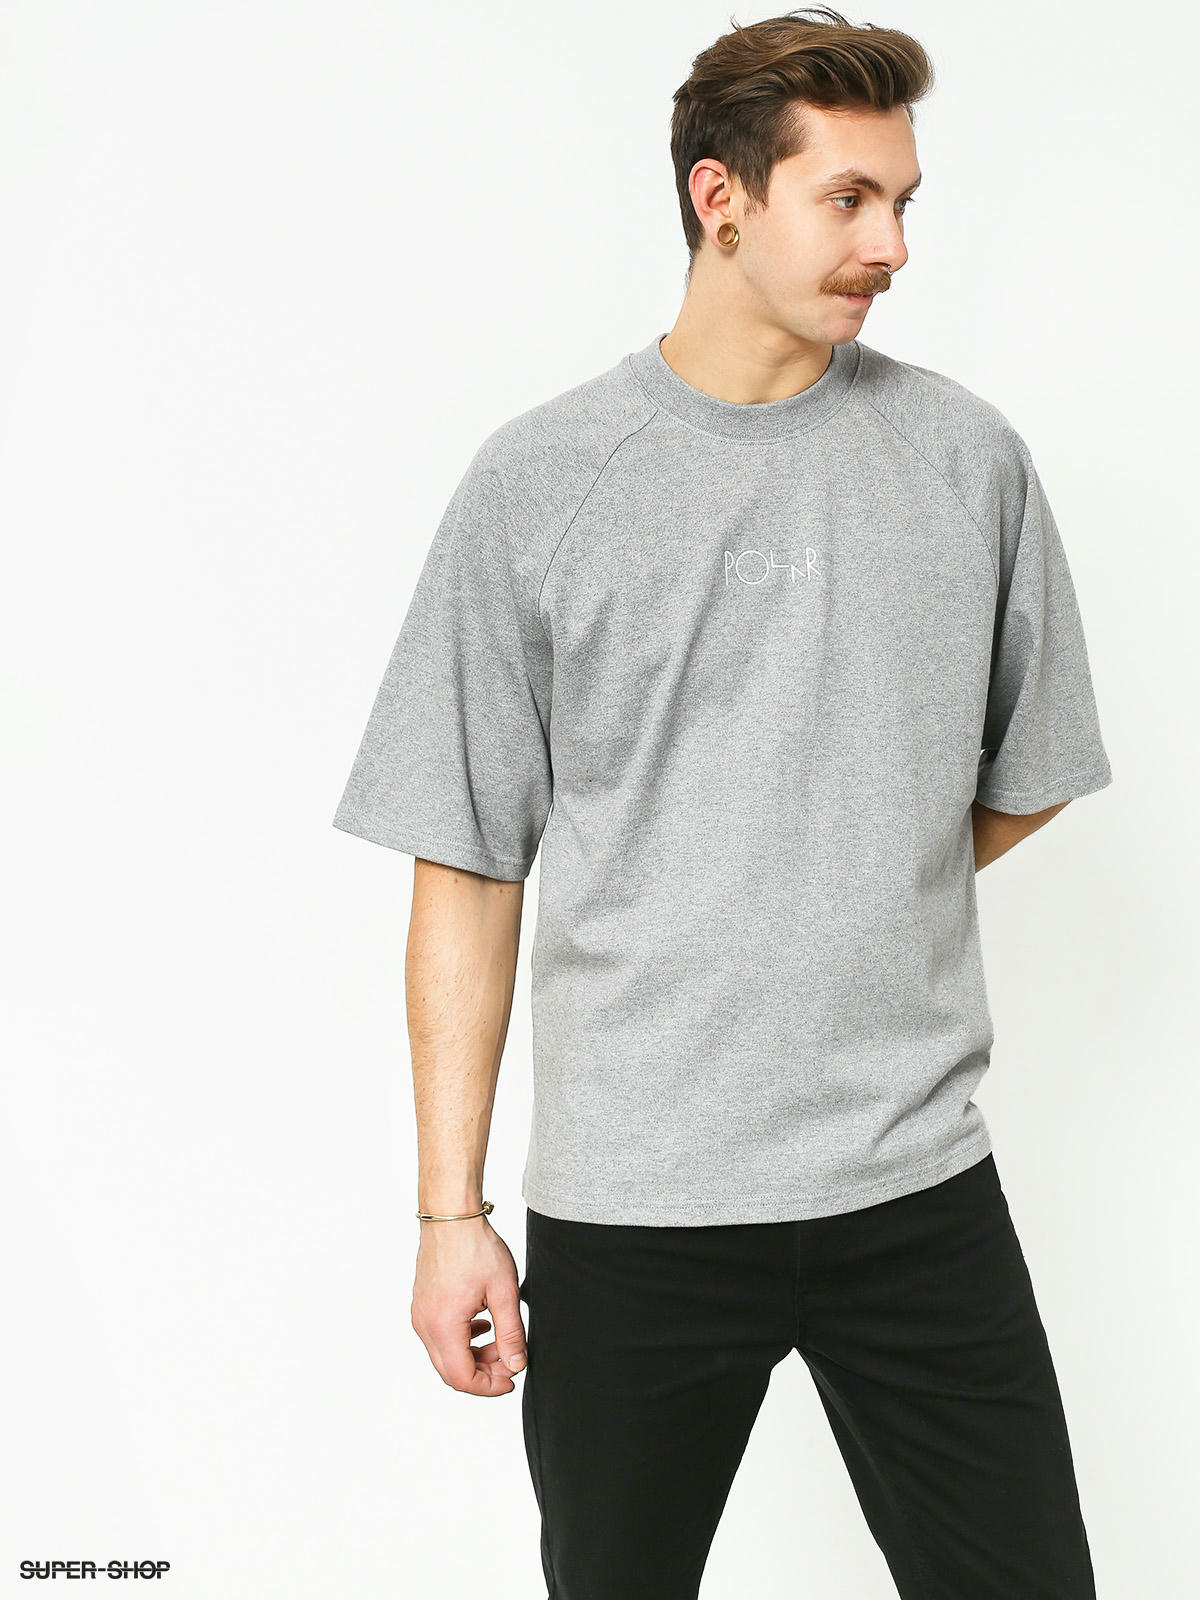 Polar Skate Default T-shirt (heather grey)